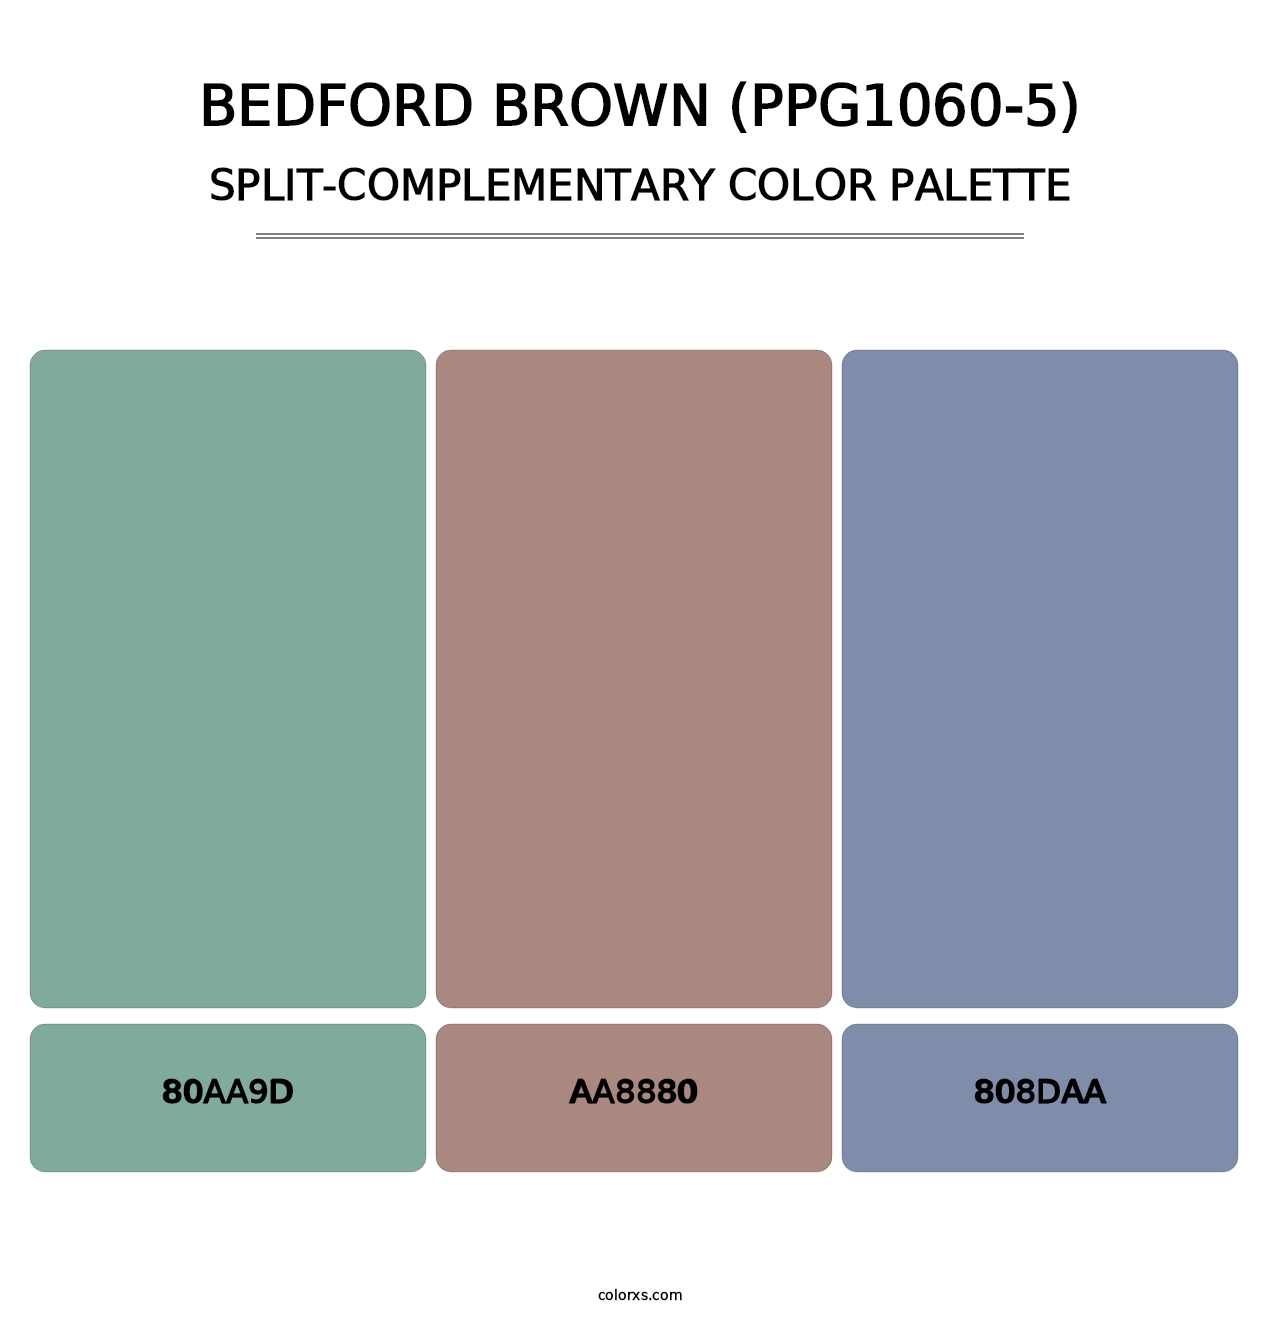 Bedford Brown (PPG1060-5) - Split-Complementary Color Palette